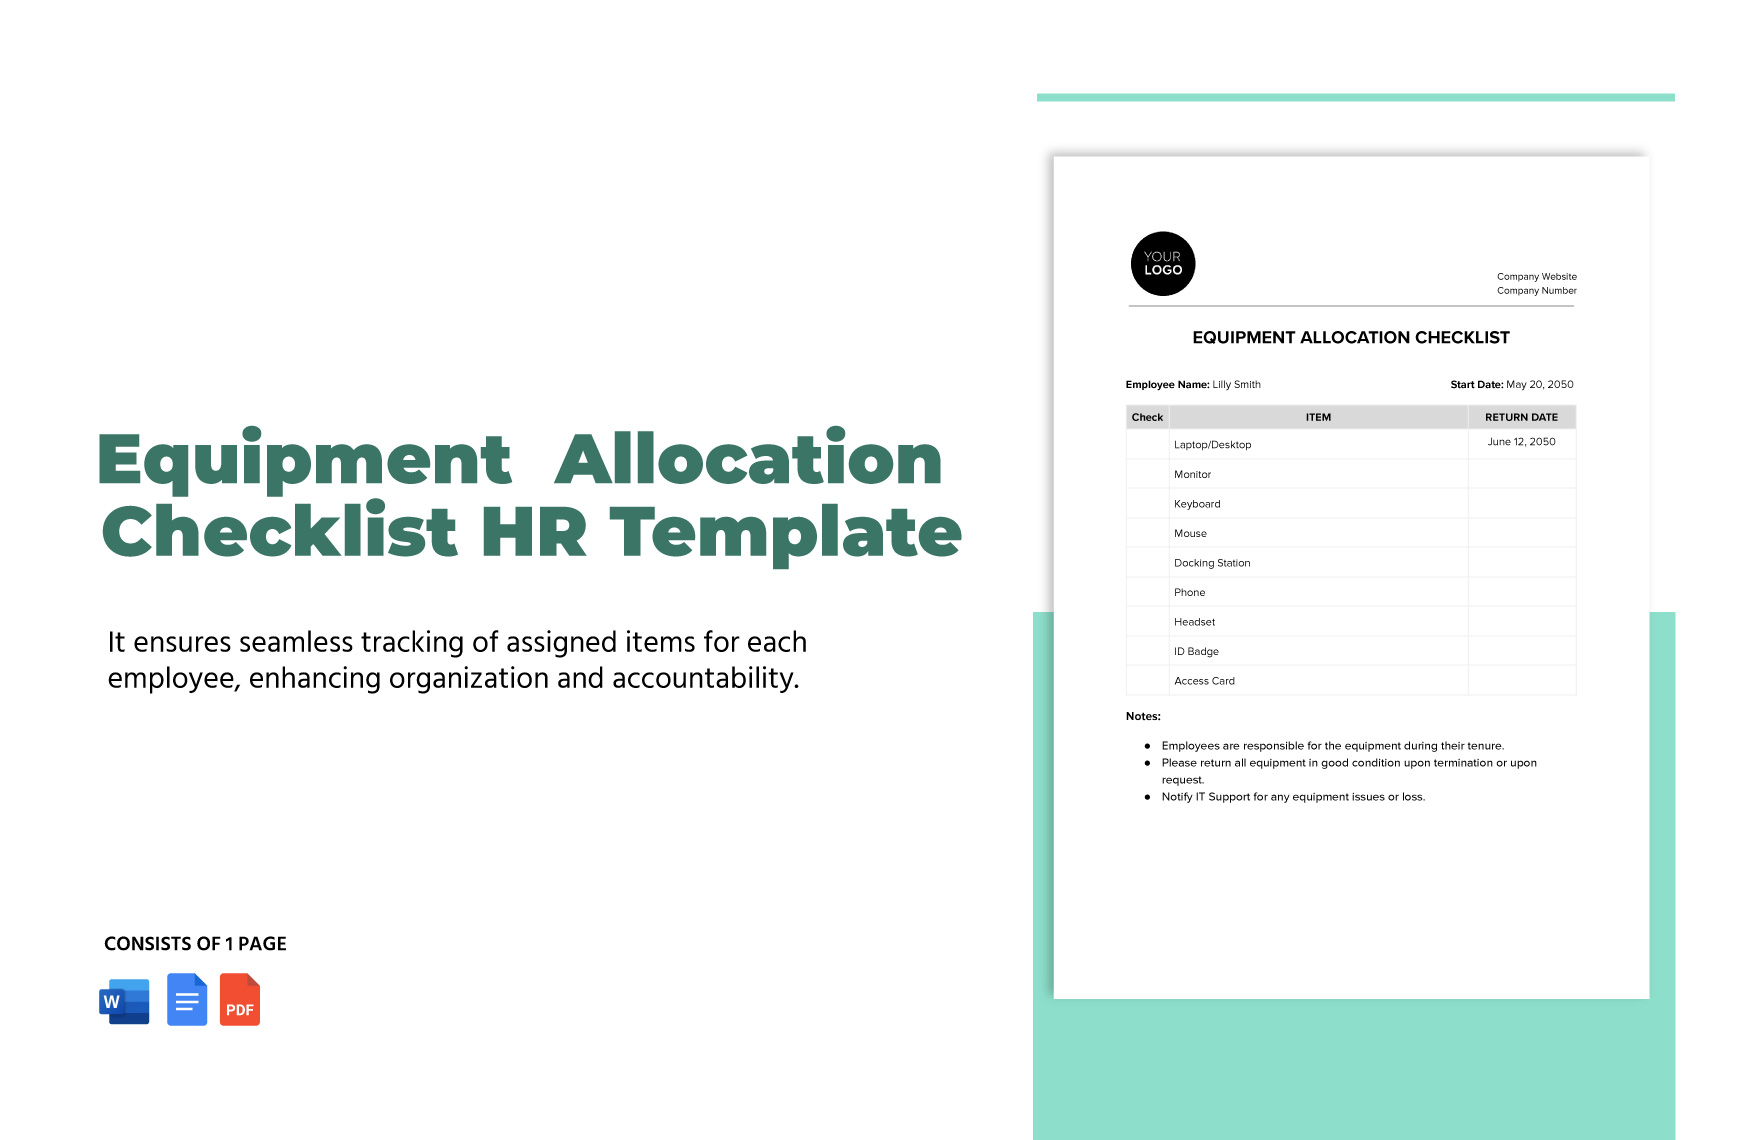 Equipment Allocation Checklist HR Template